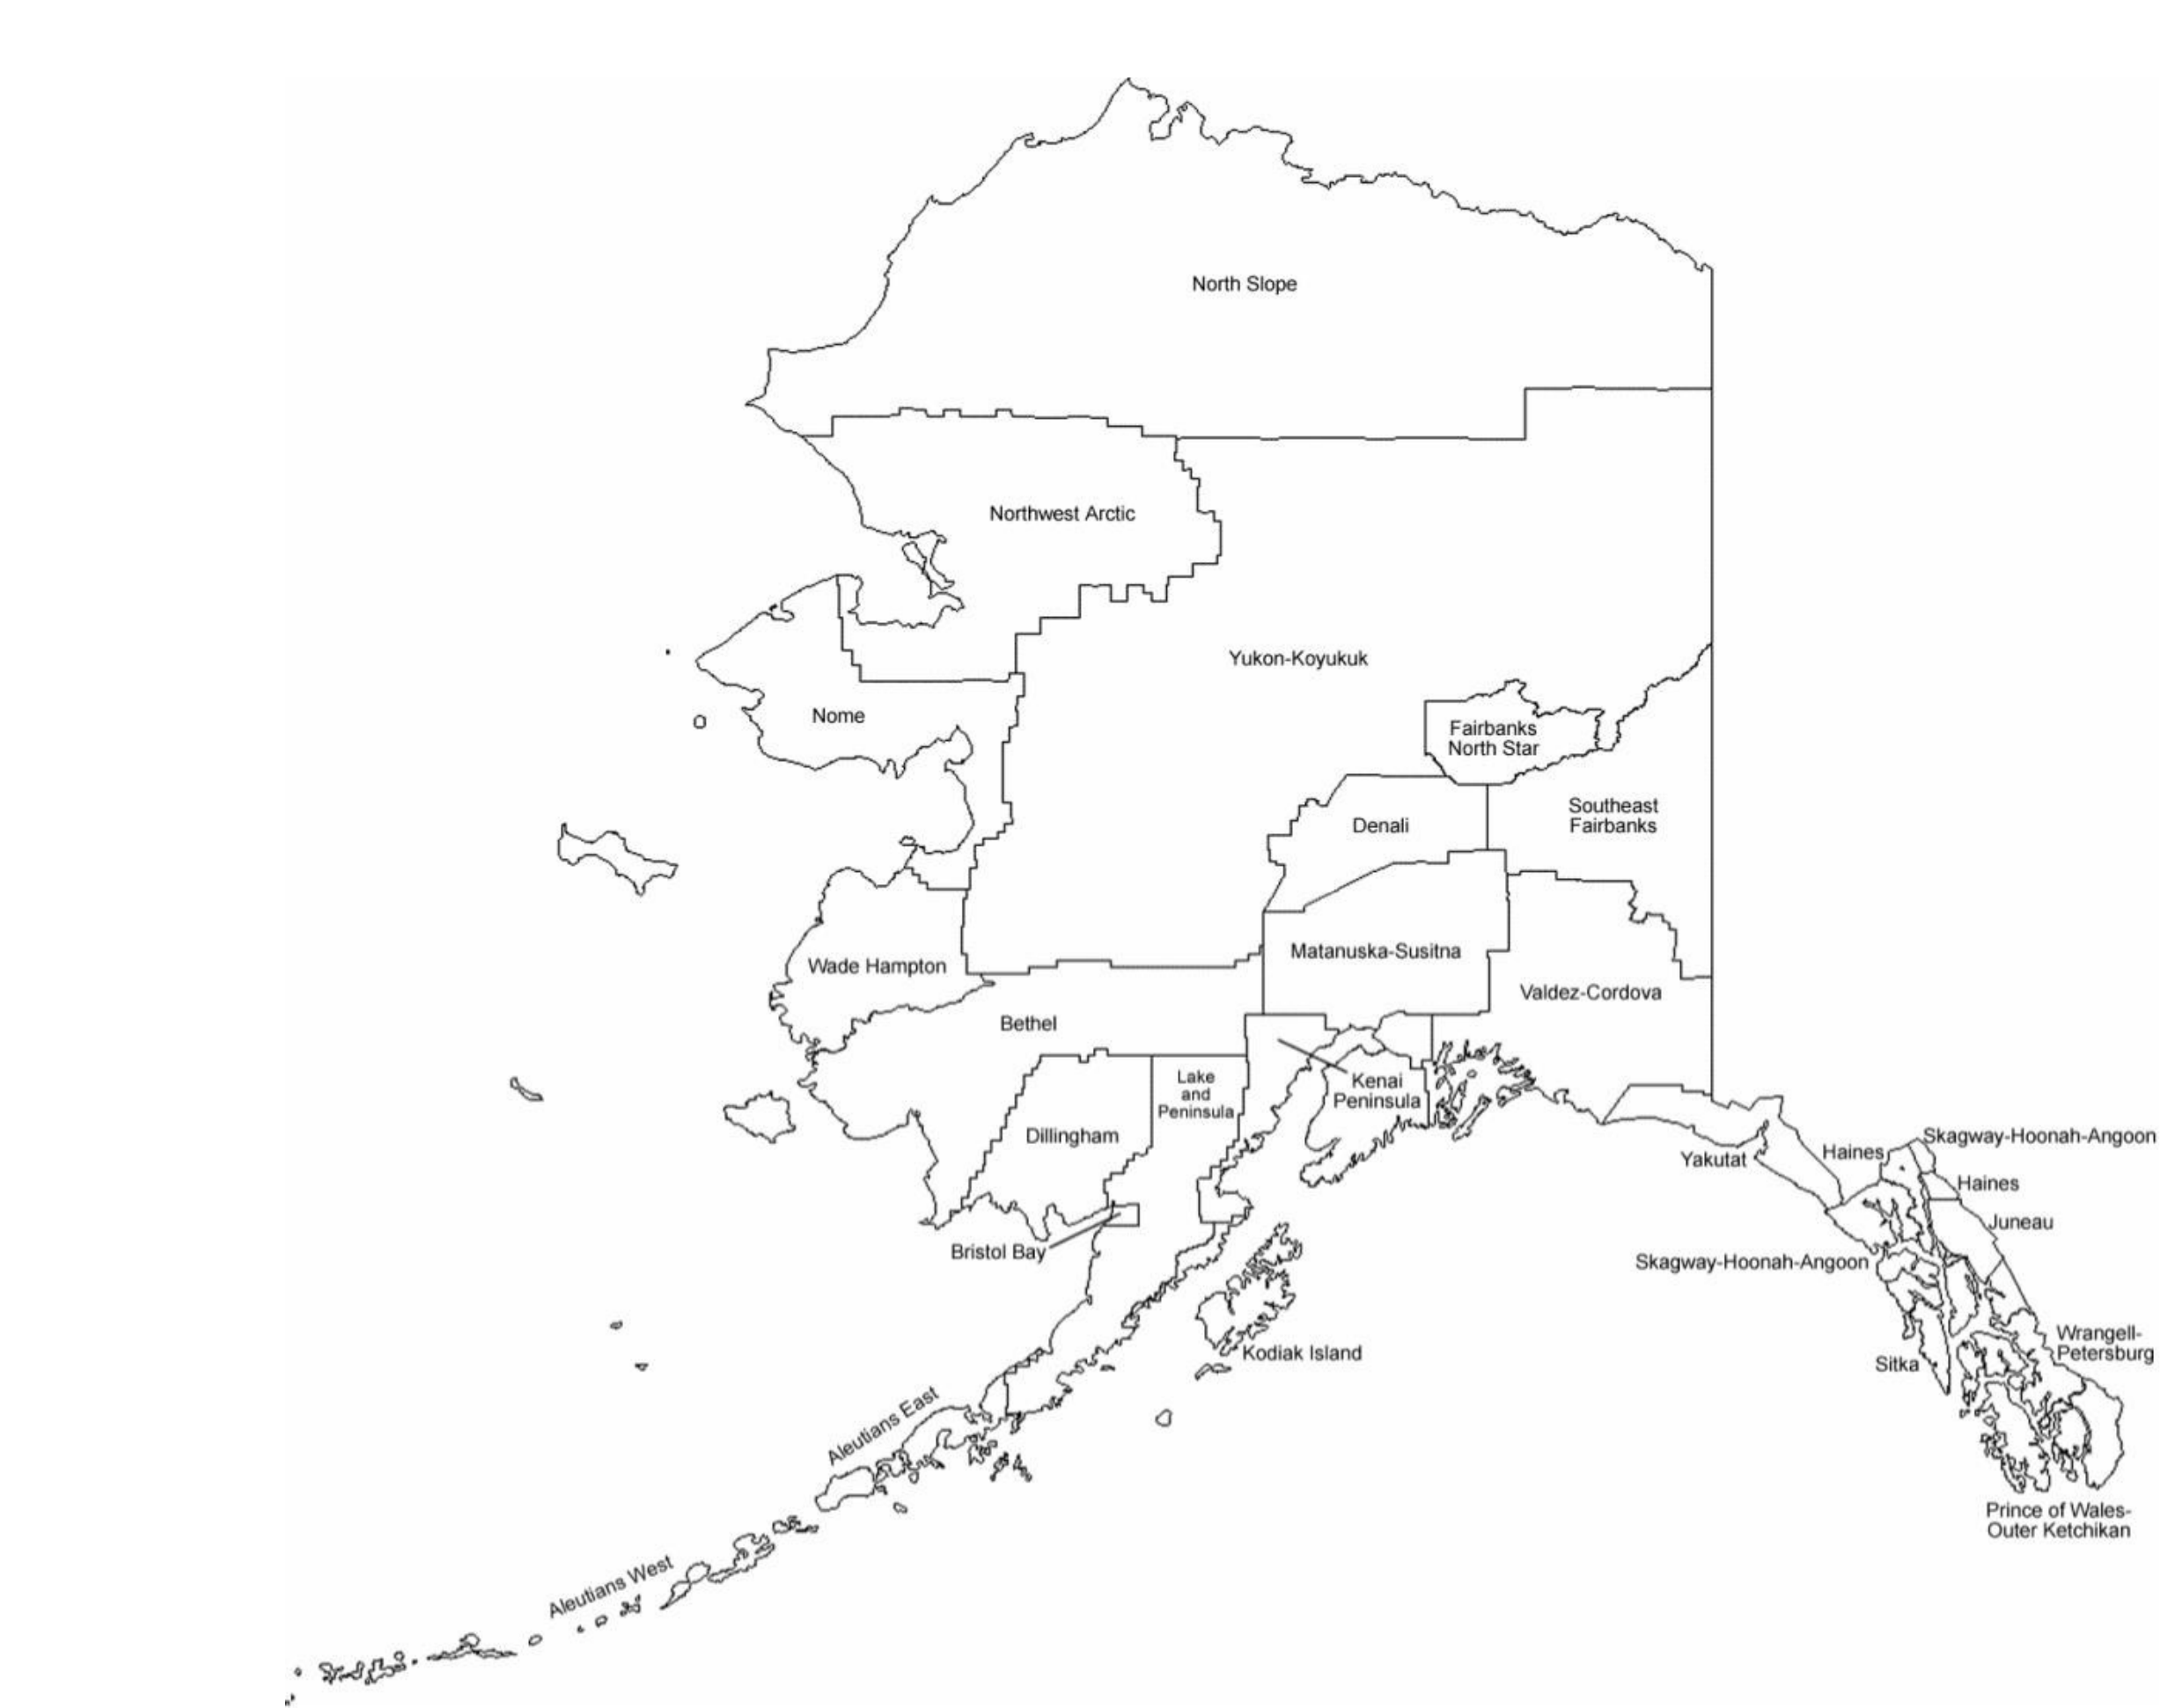 Alaska Borough Map With Borough Names Free Download